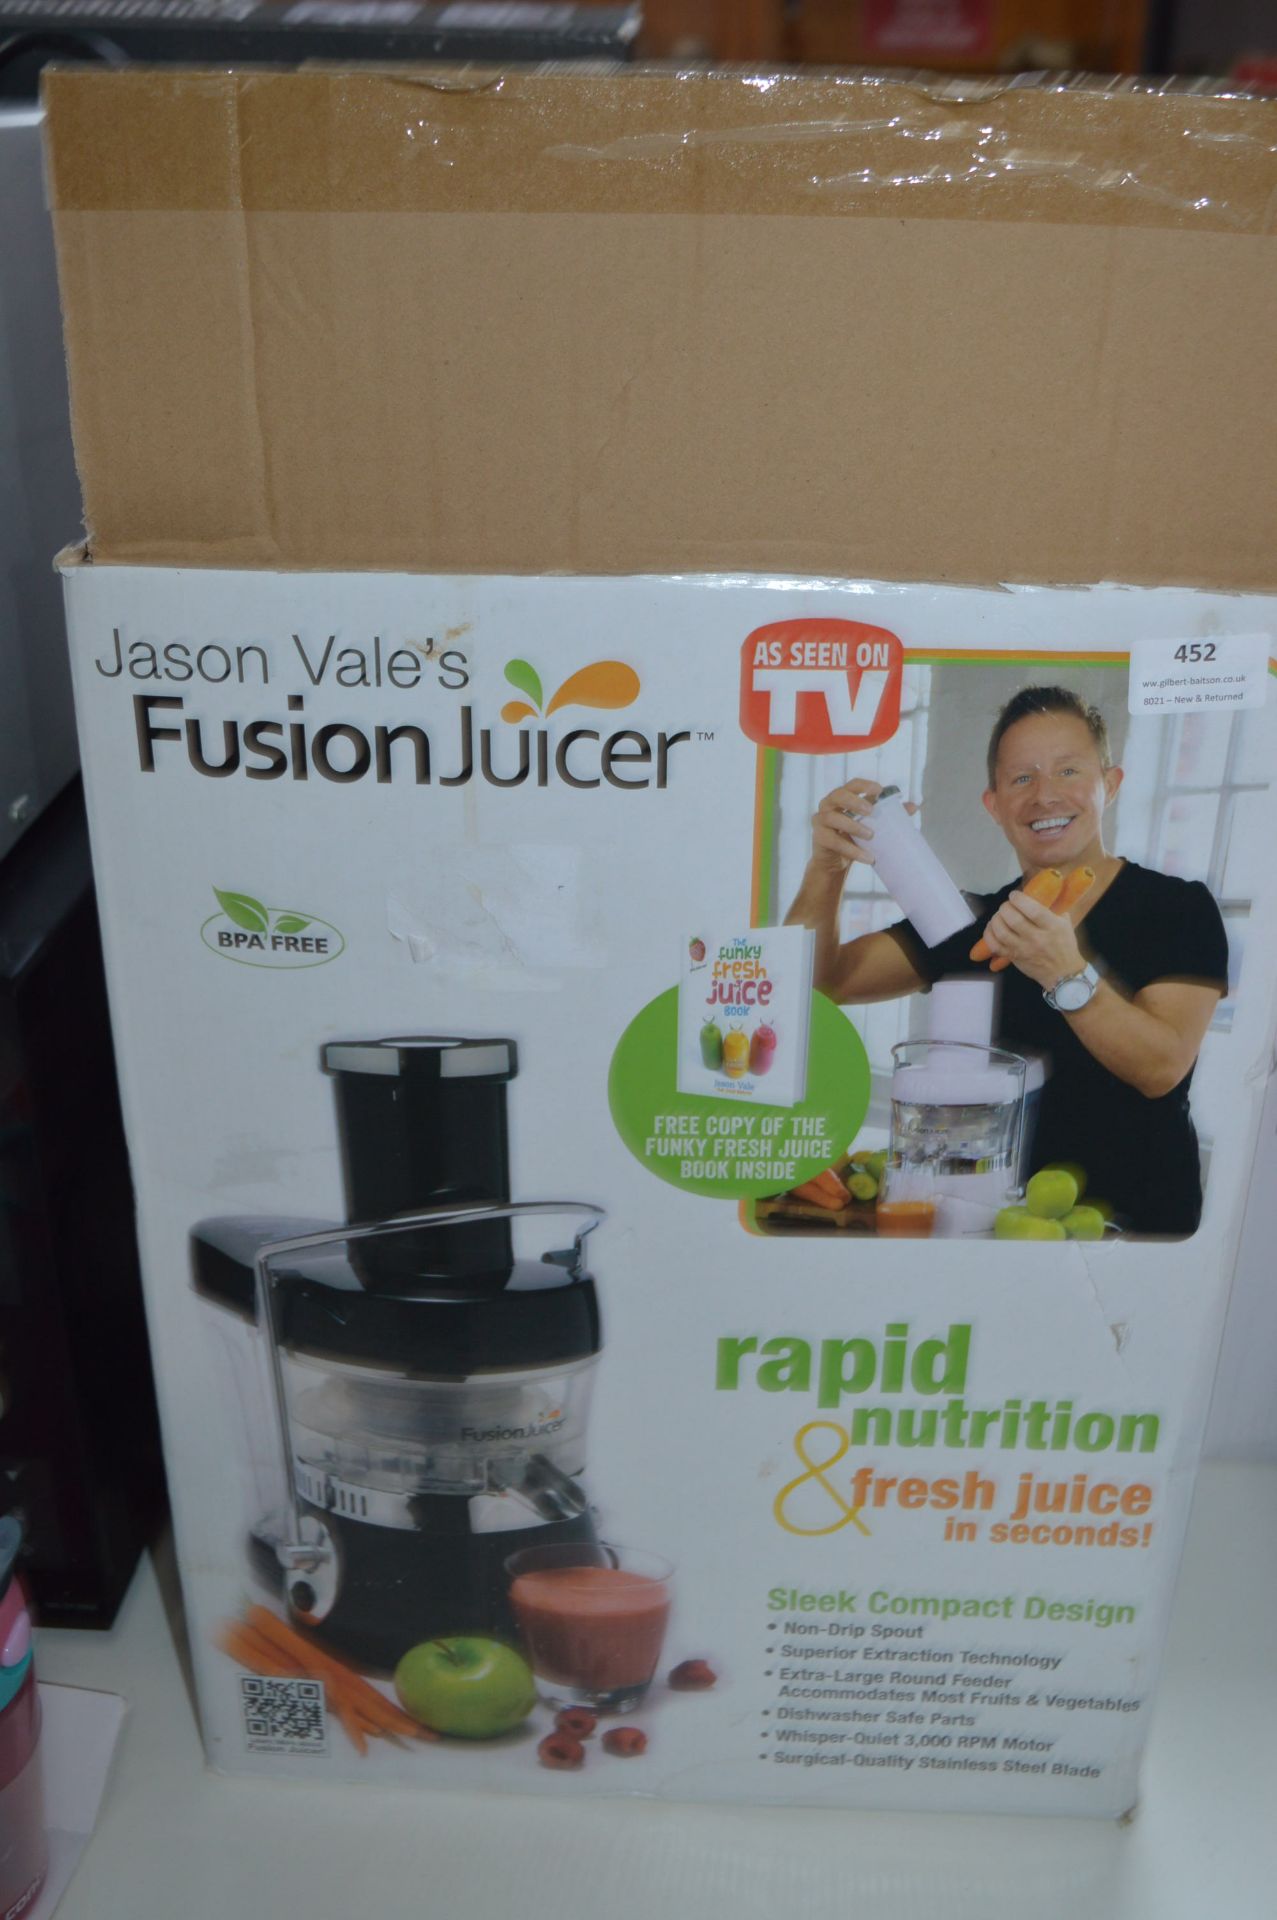 Fusion Juicer